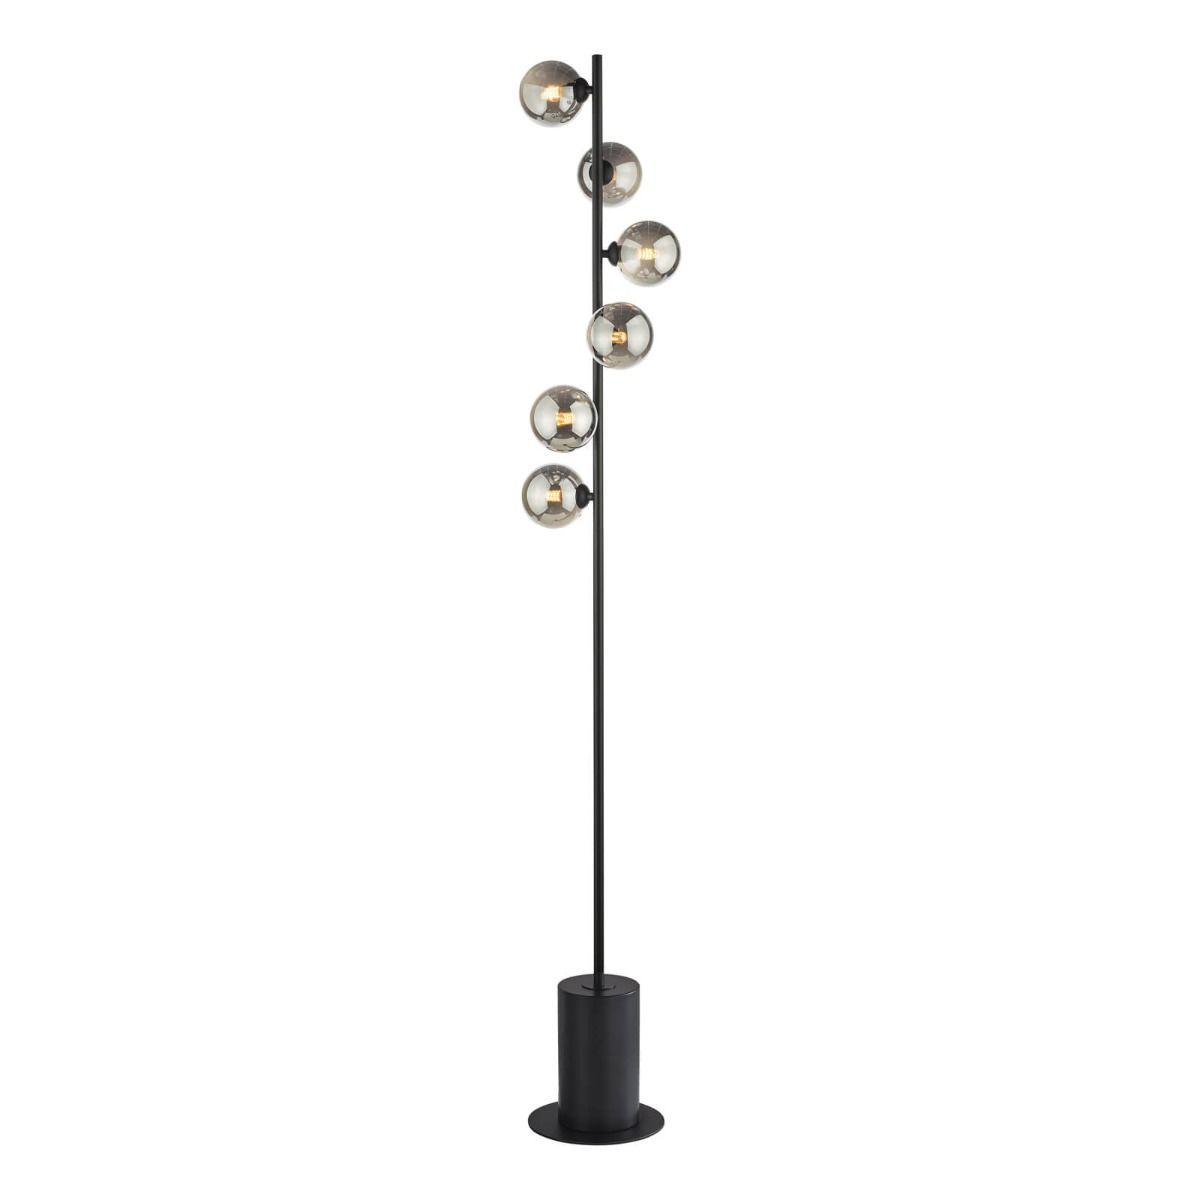 Spiral 6 Light Floor Lamp Polished Chrome/Matt Black-Finish Glass-Smoked/Opal